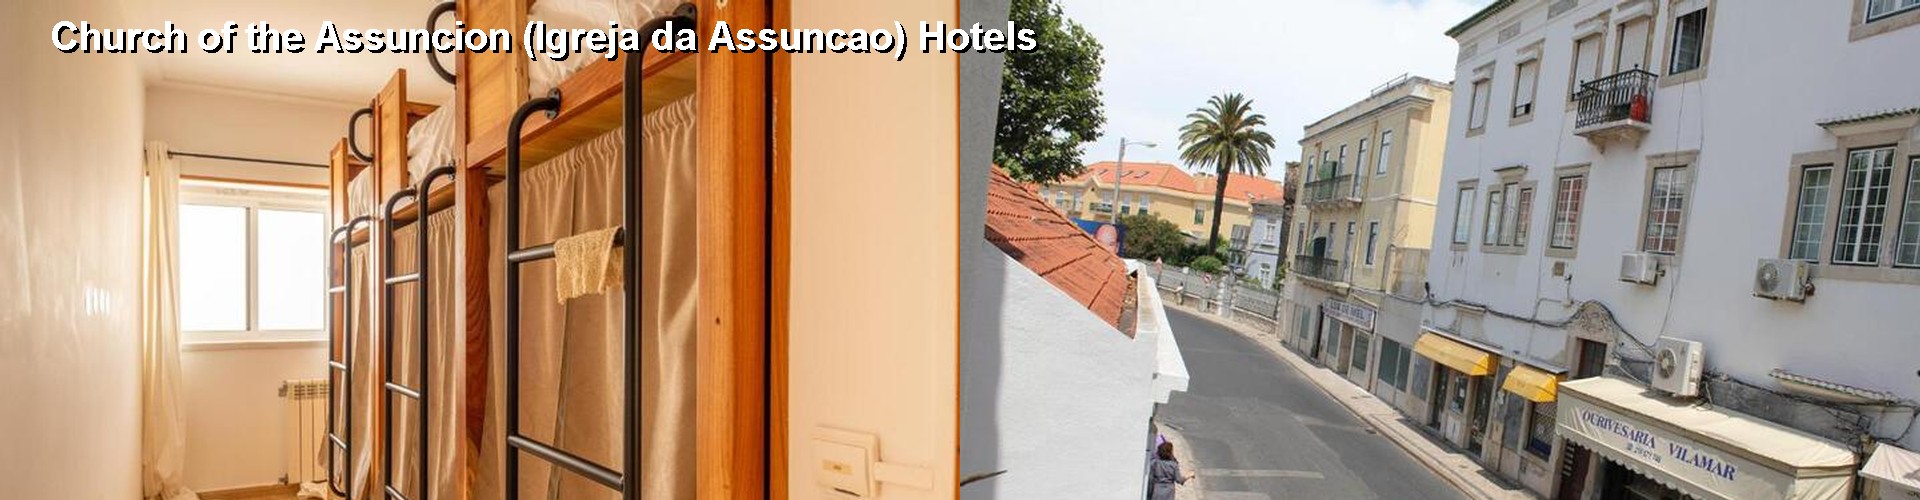 5 Best Hotels near Church of the Assuncion (Igreja da Assuncao)